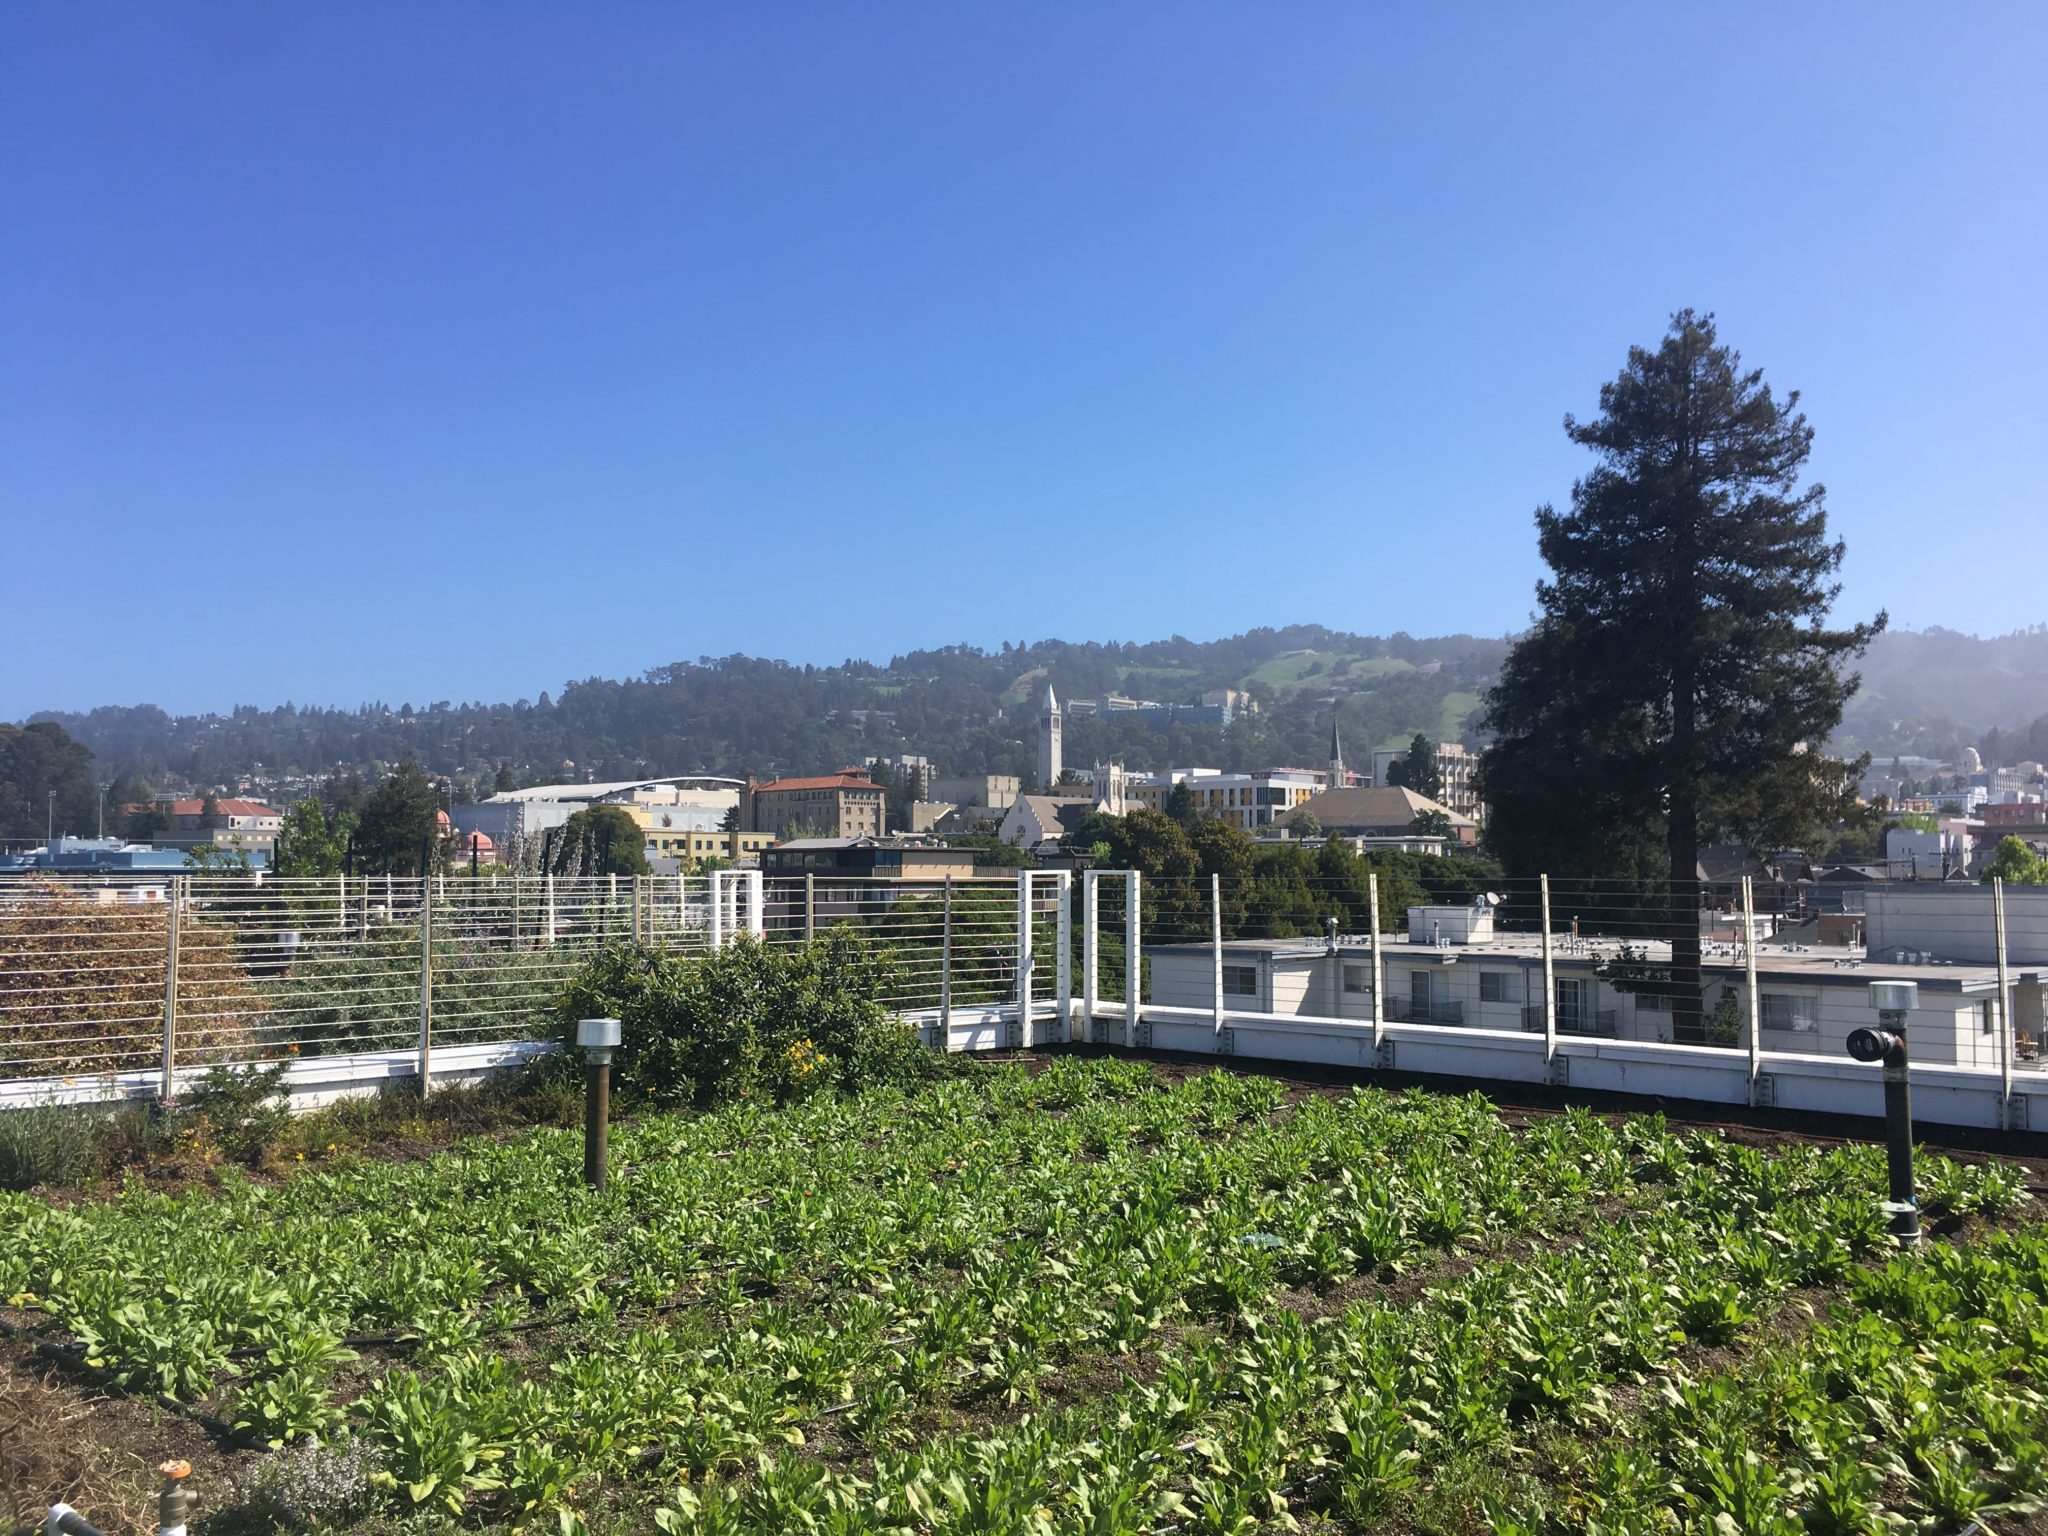 Bluma Flower Farms operates a rooftop garden in Berkeley. Photo by Alana Siegner.